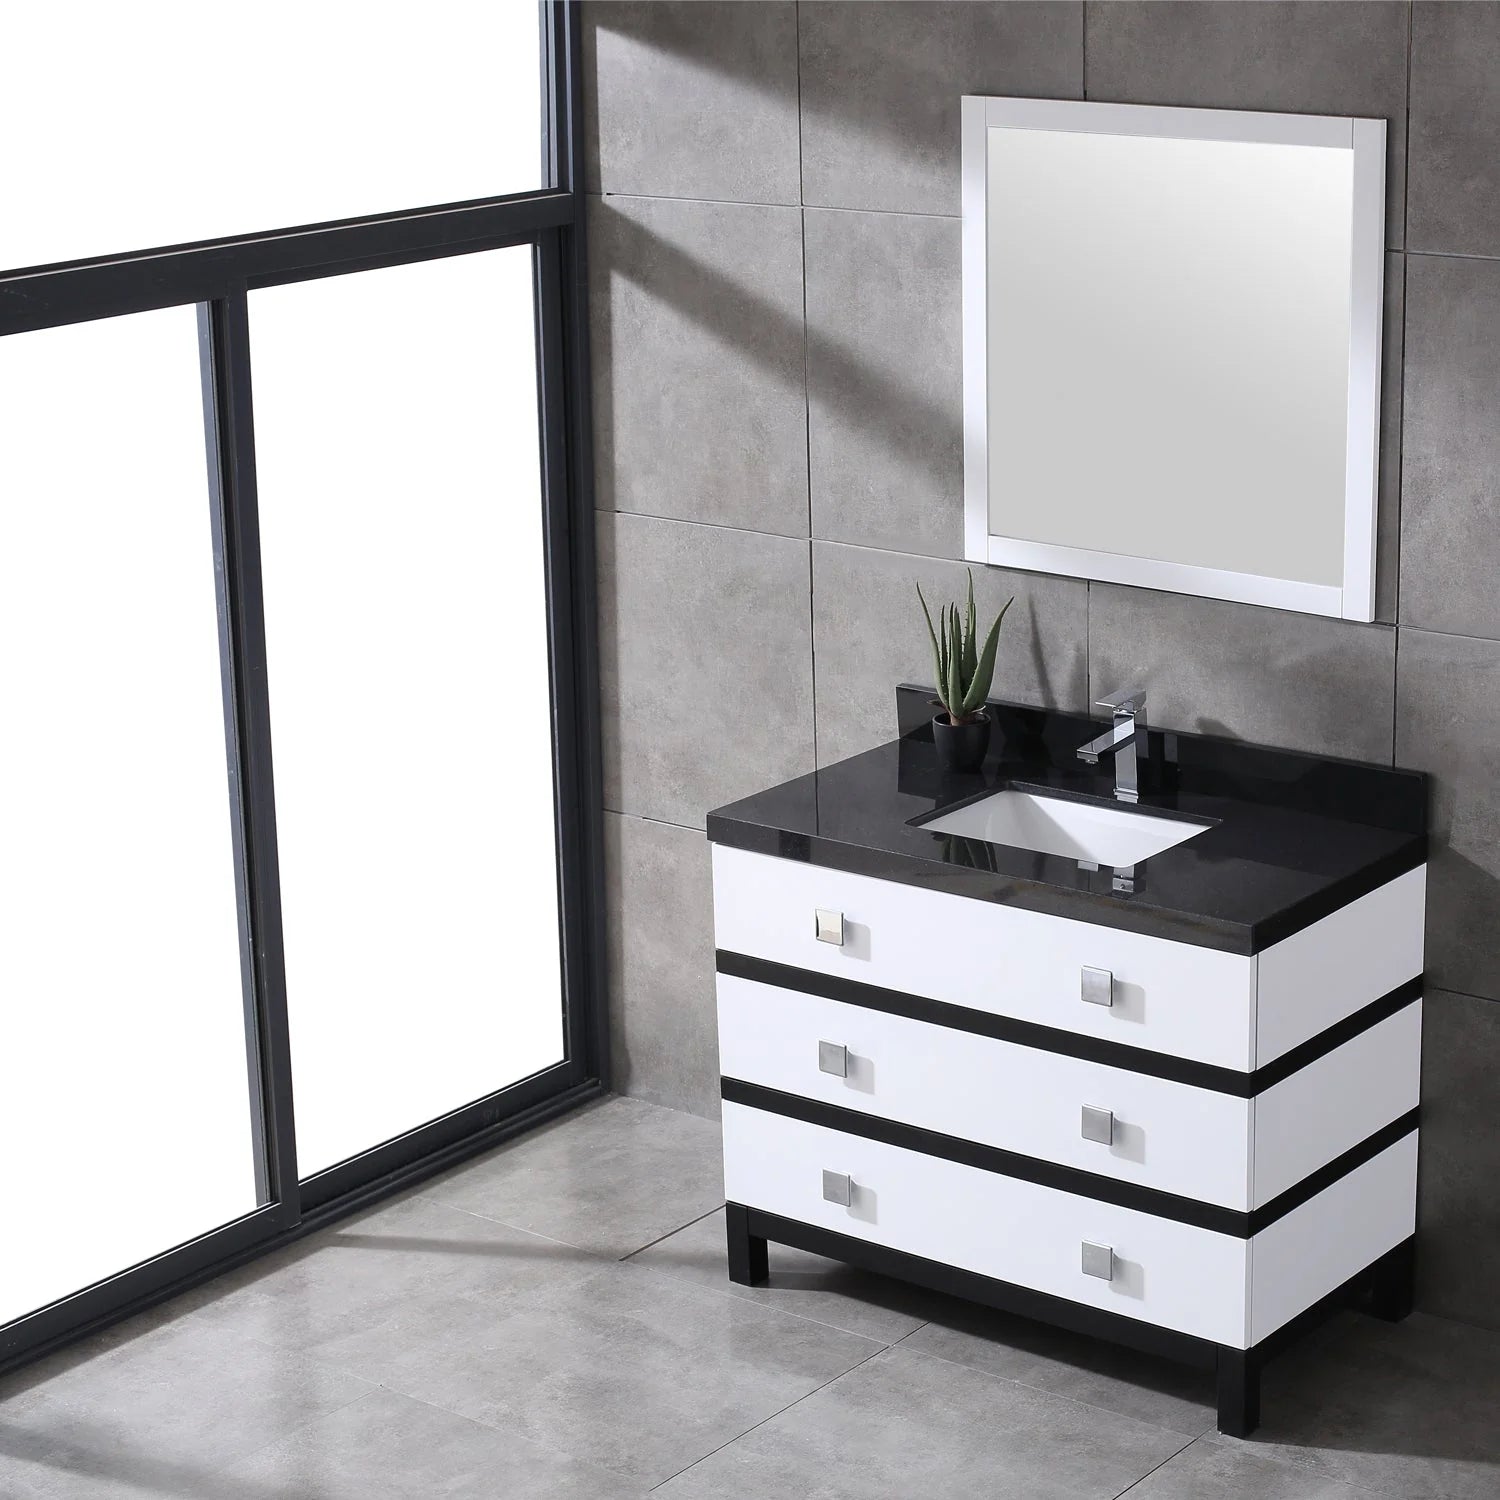 Eviva Sydney 42 Inch Bathroom Vanity with Solid Quartz Countertop - Bathroom Design Center